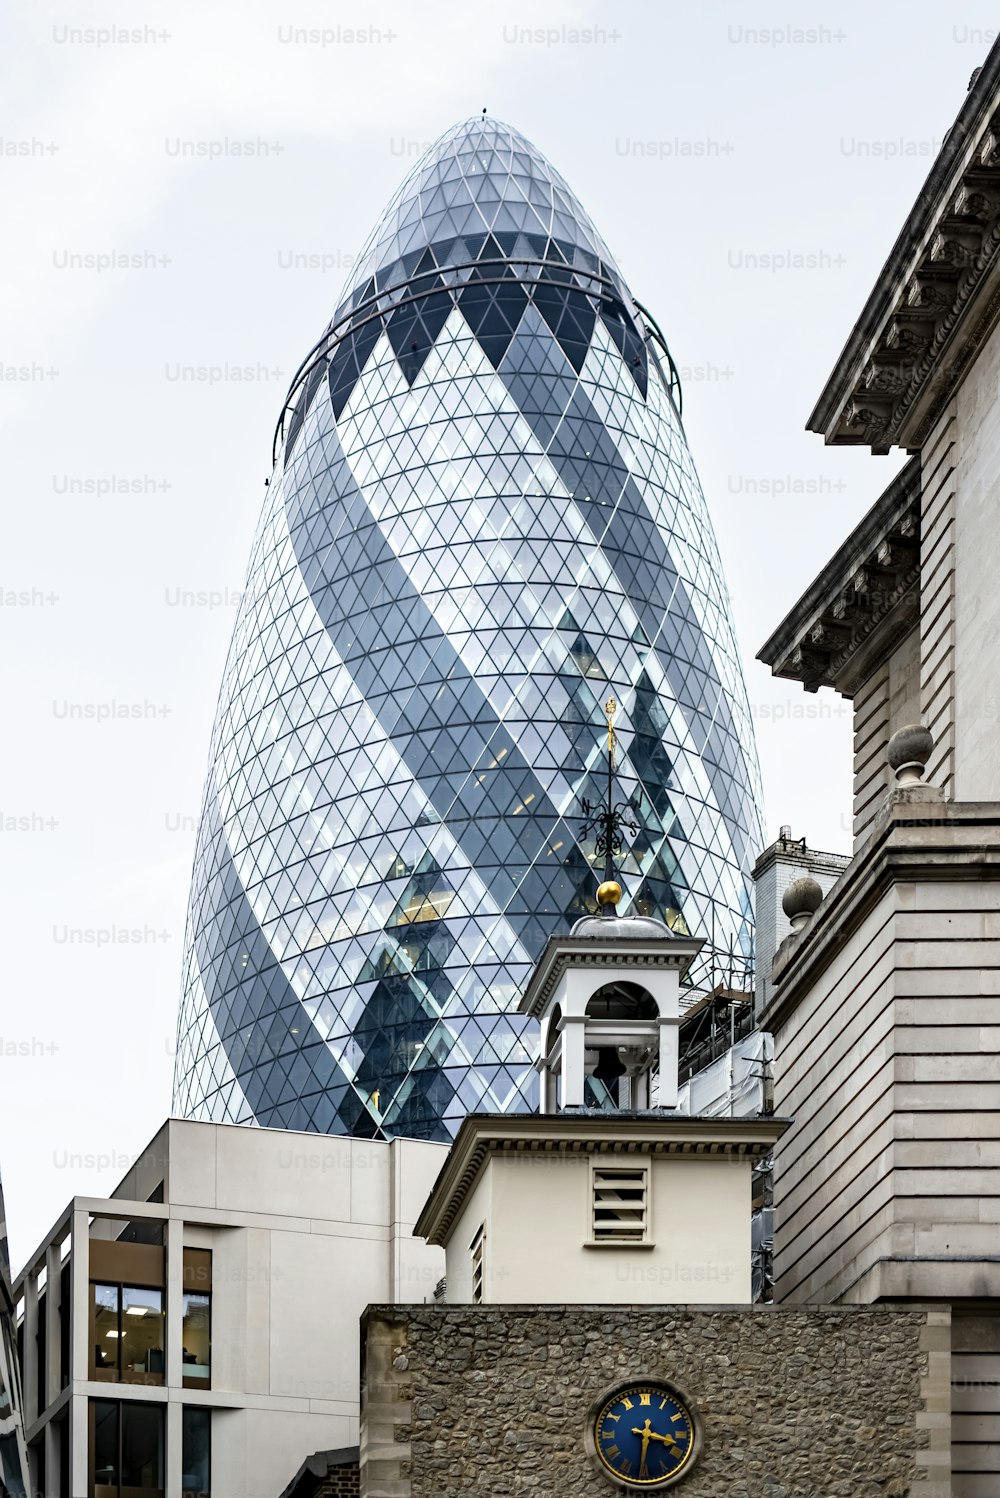 Un edificio alto de cristal con un reloj a un lado